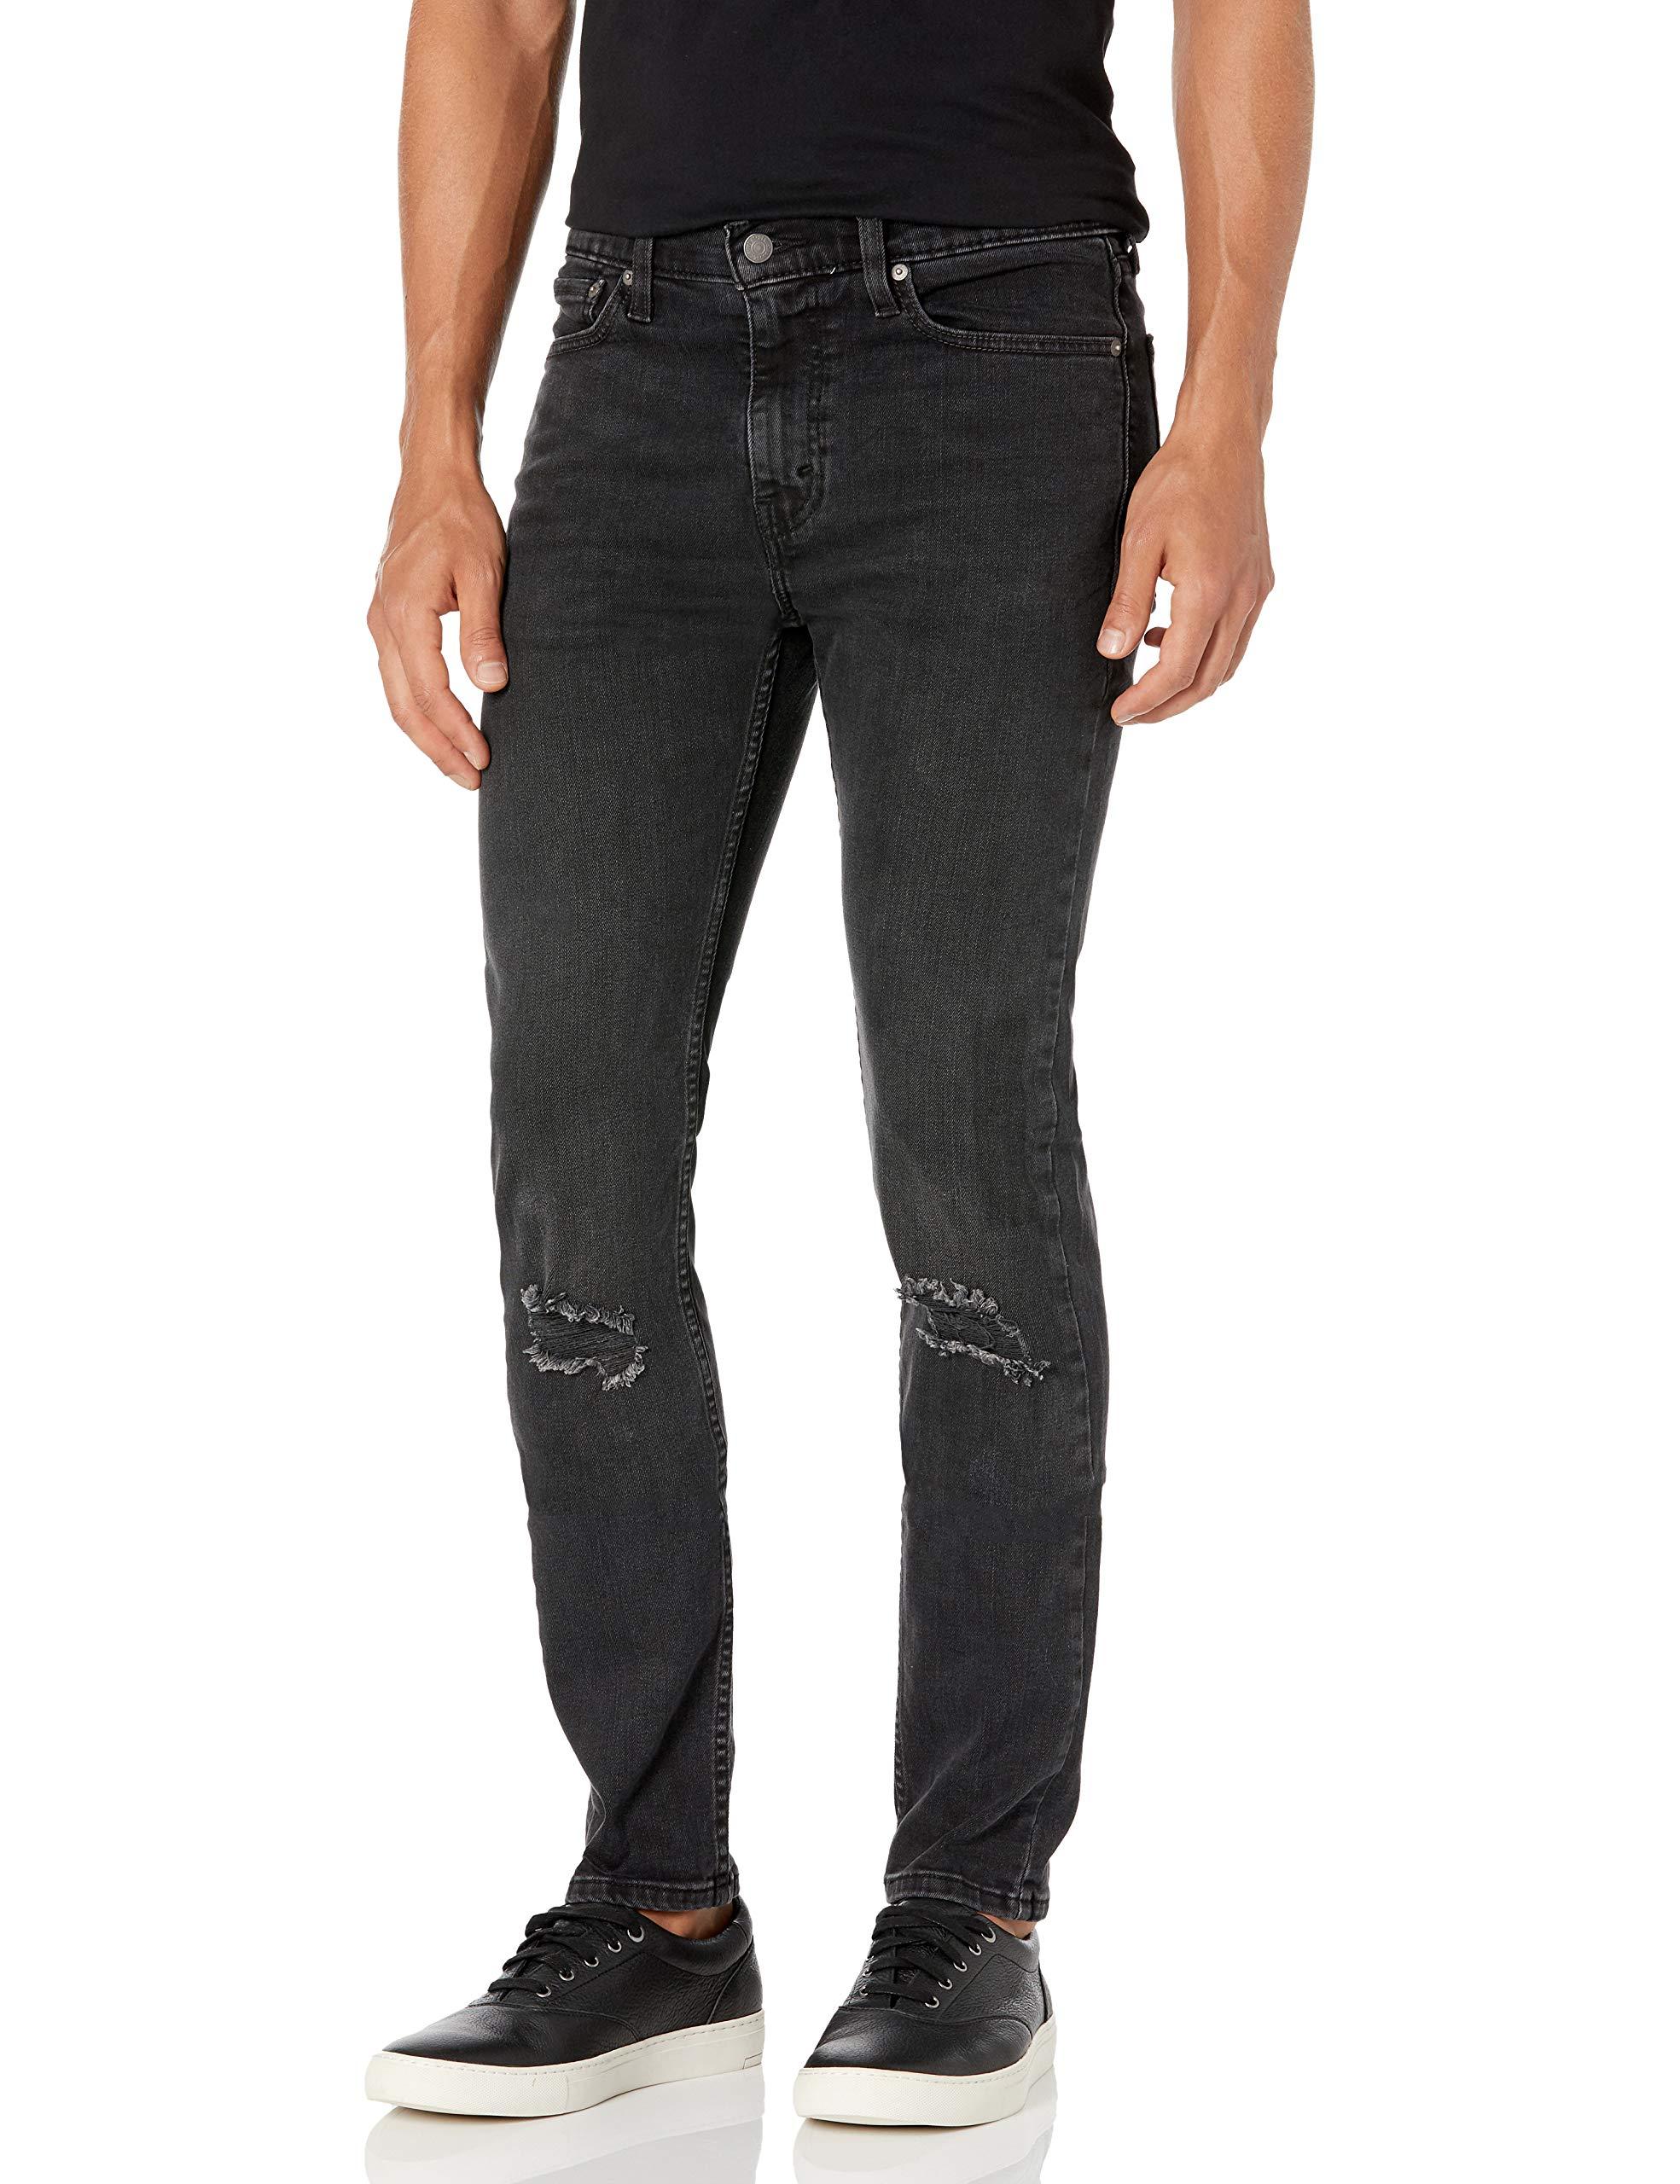 Levi's Denim 510 Skinny Fit Jeans in Black for Men - Save 21% - Lyst